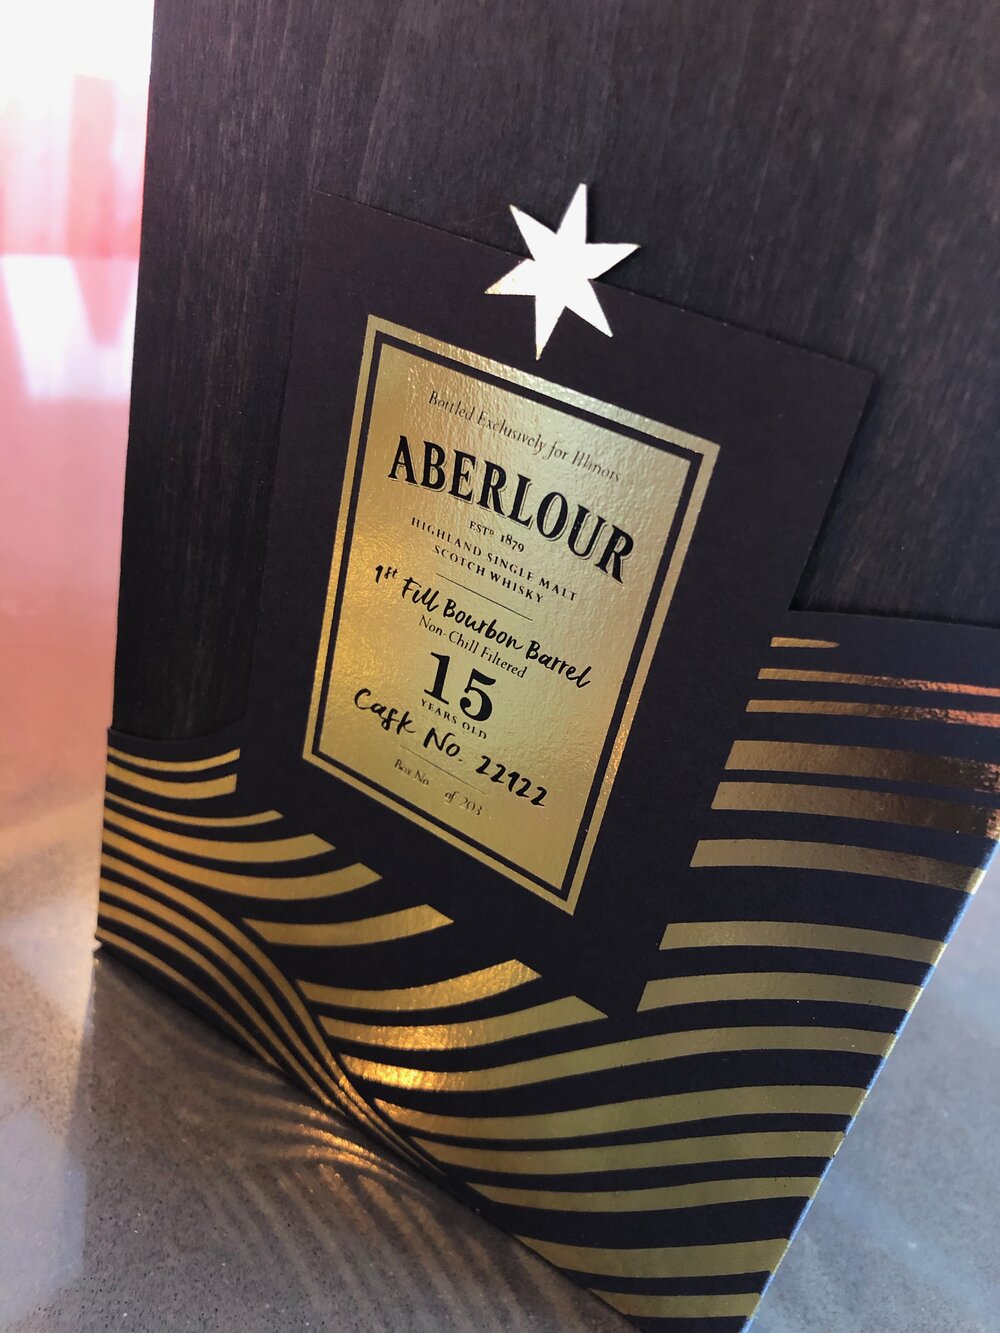  Detail of gold Aberlour label on black box.  